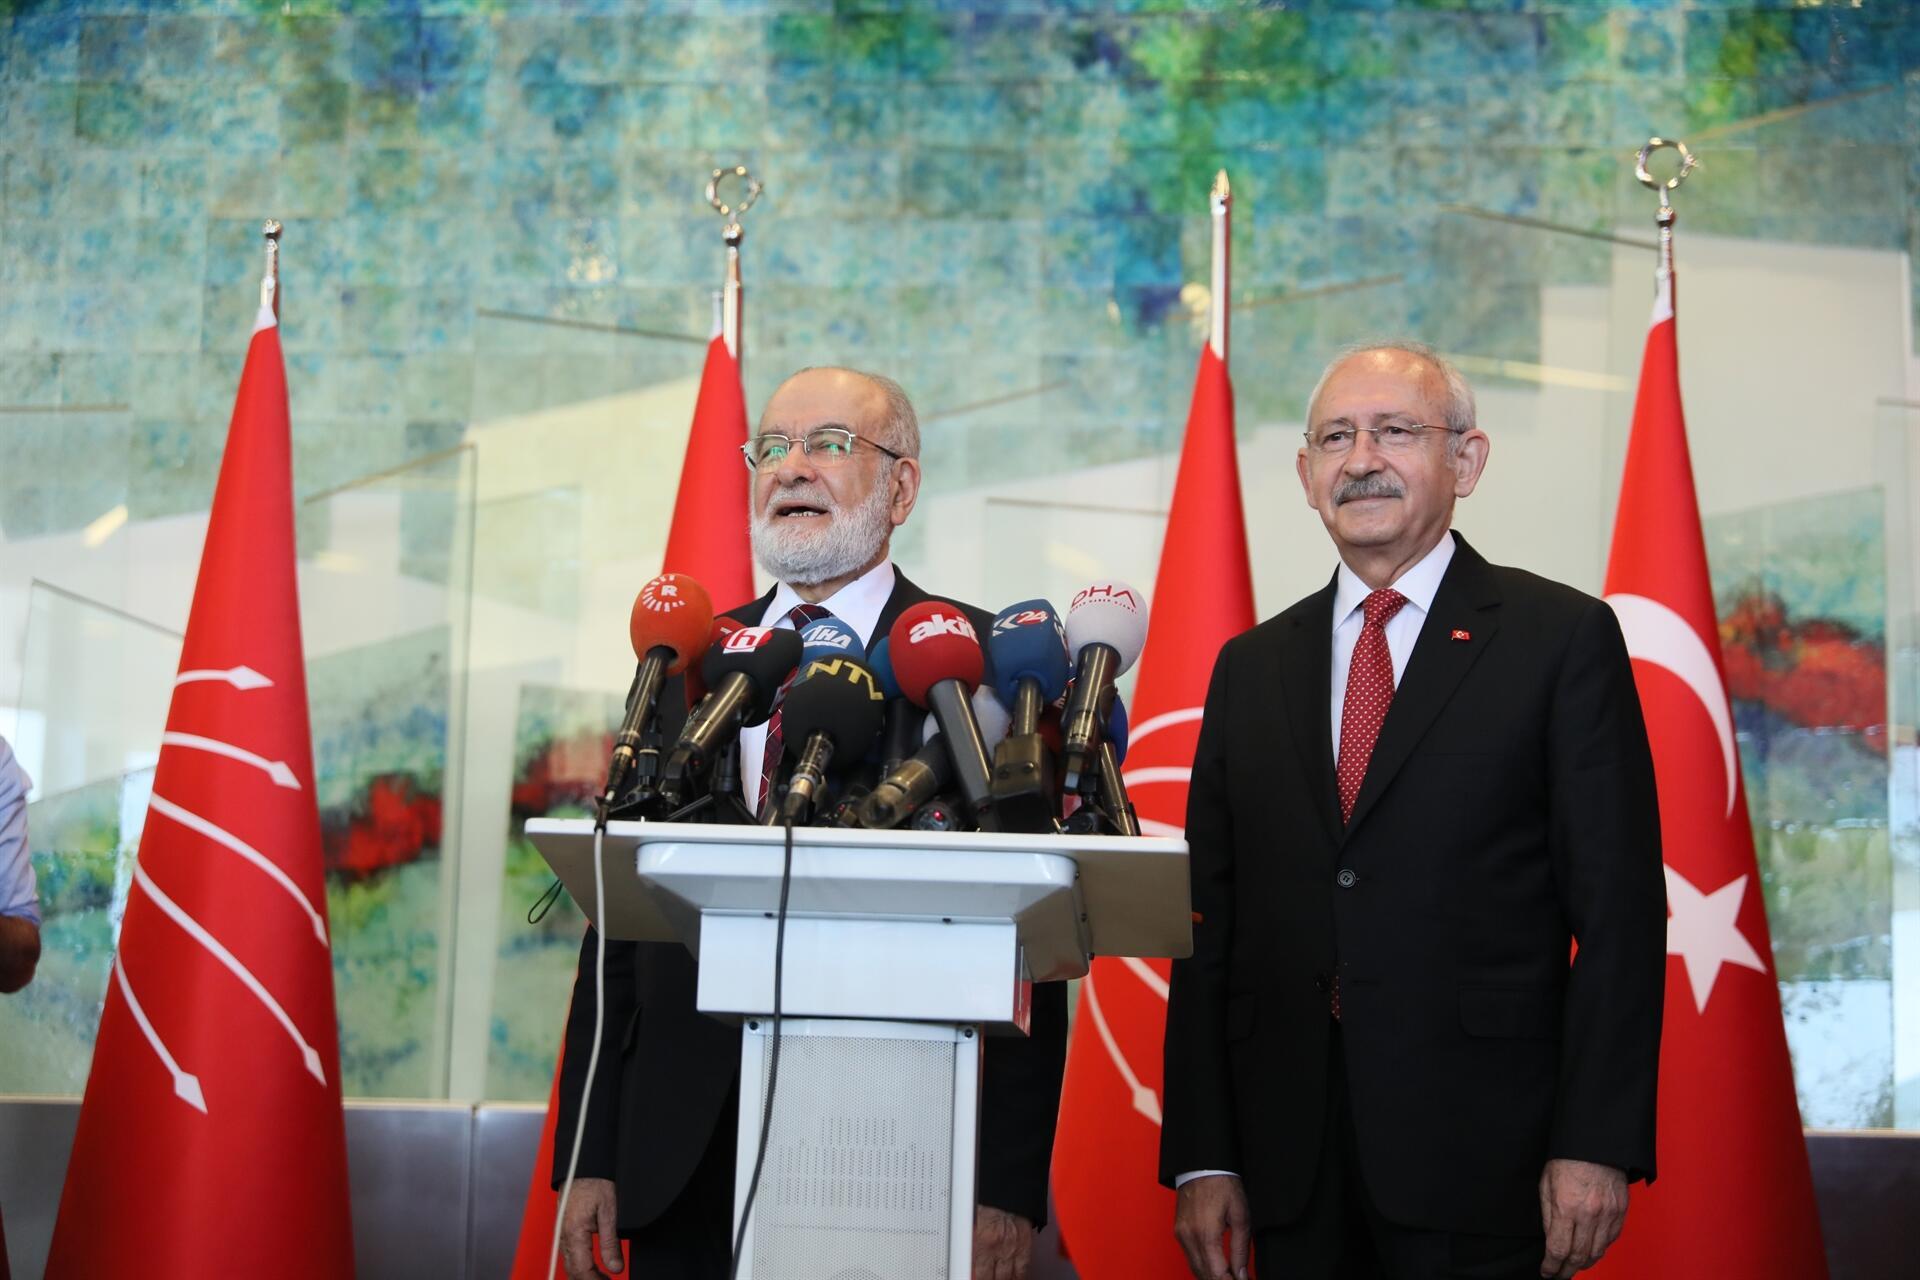 CHP leader meets SP leader amid alliance talks